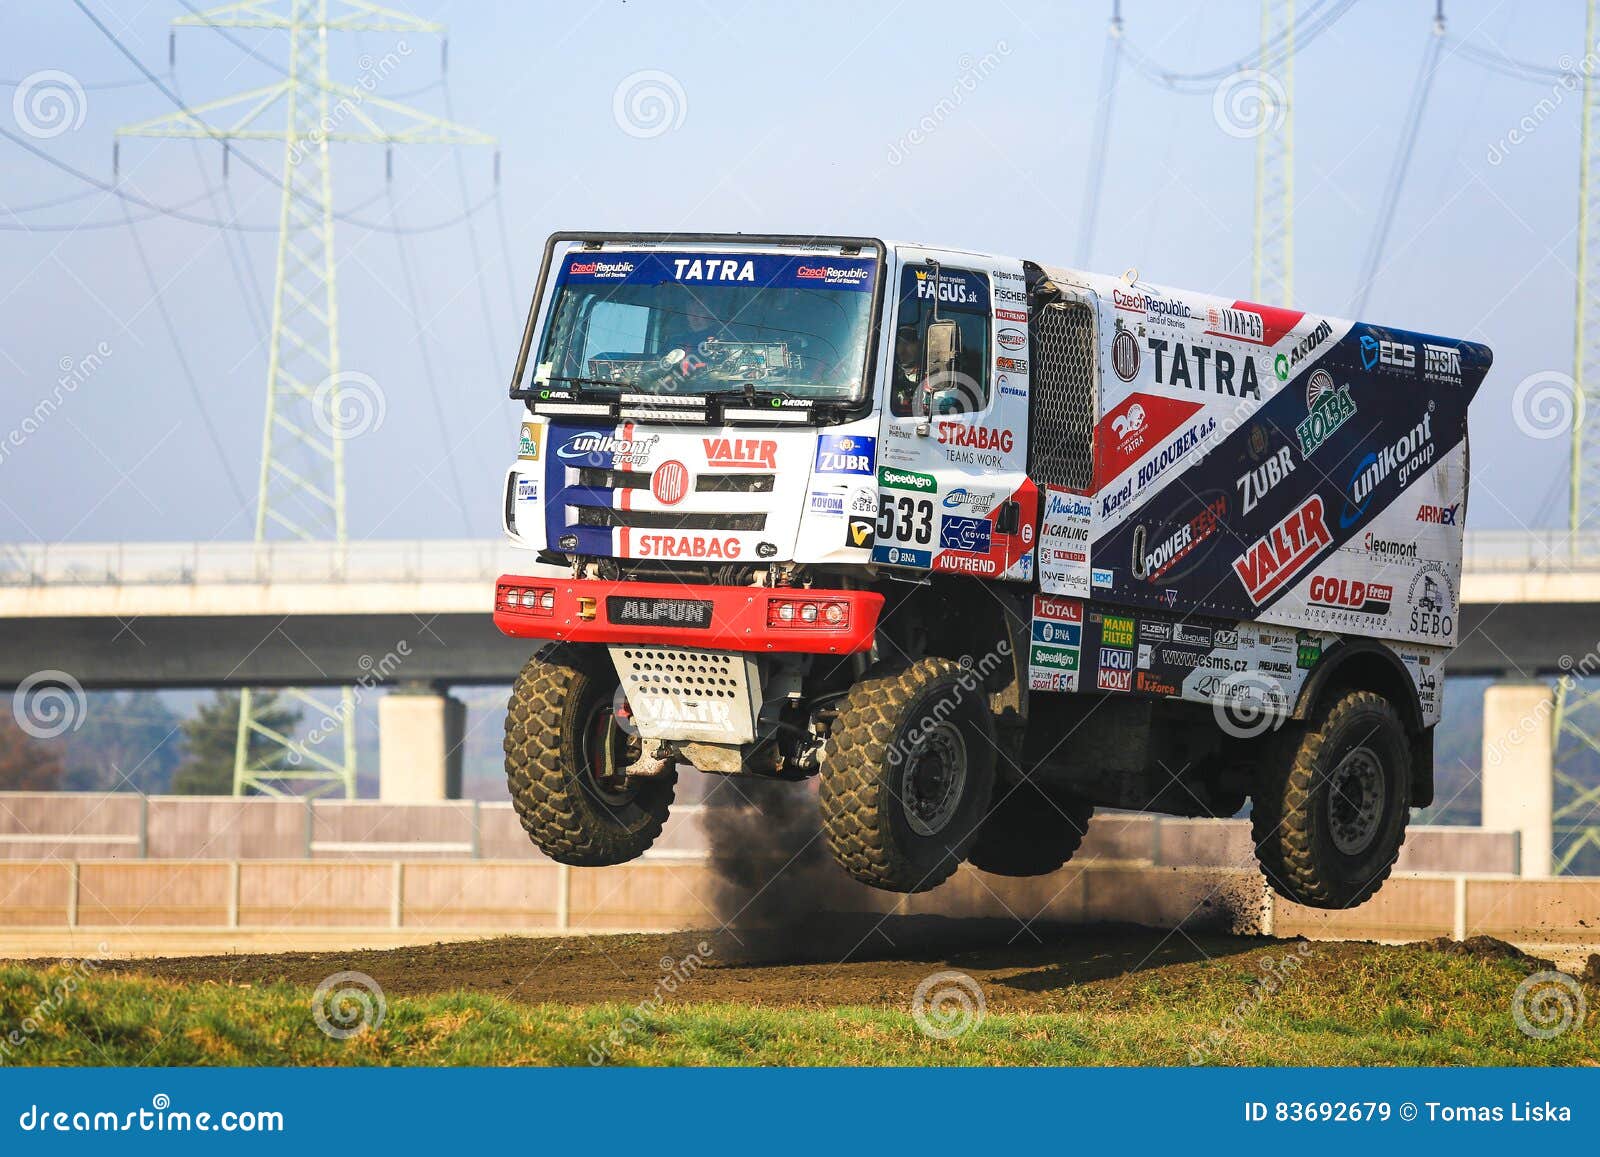 tatra-phoenix-mx-buggyra-racing-83692679.jpg